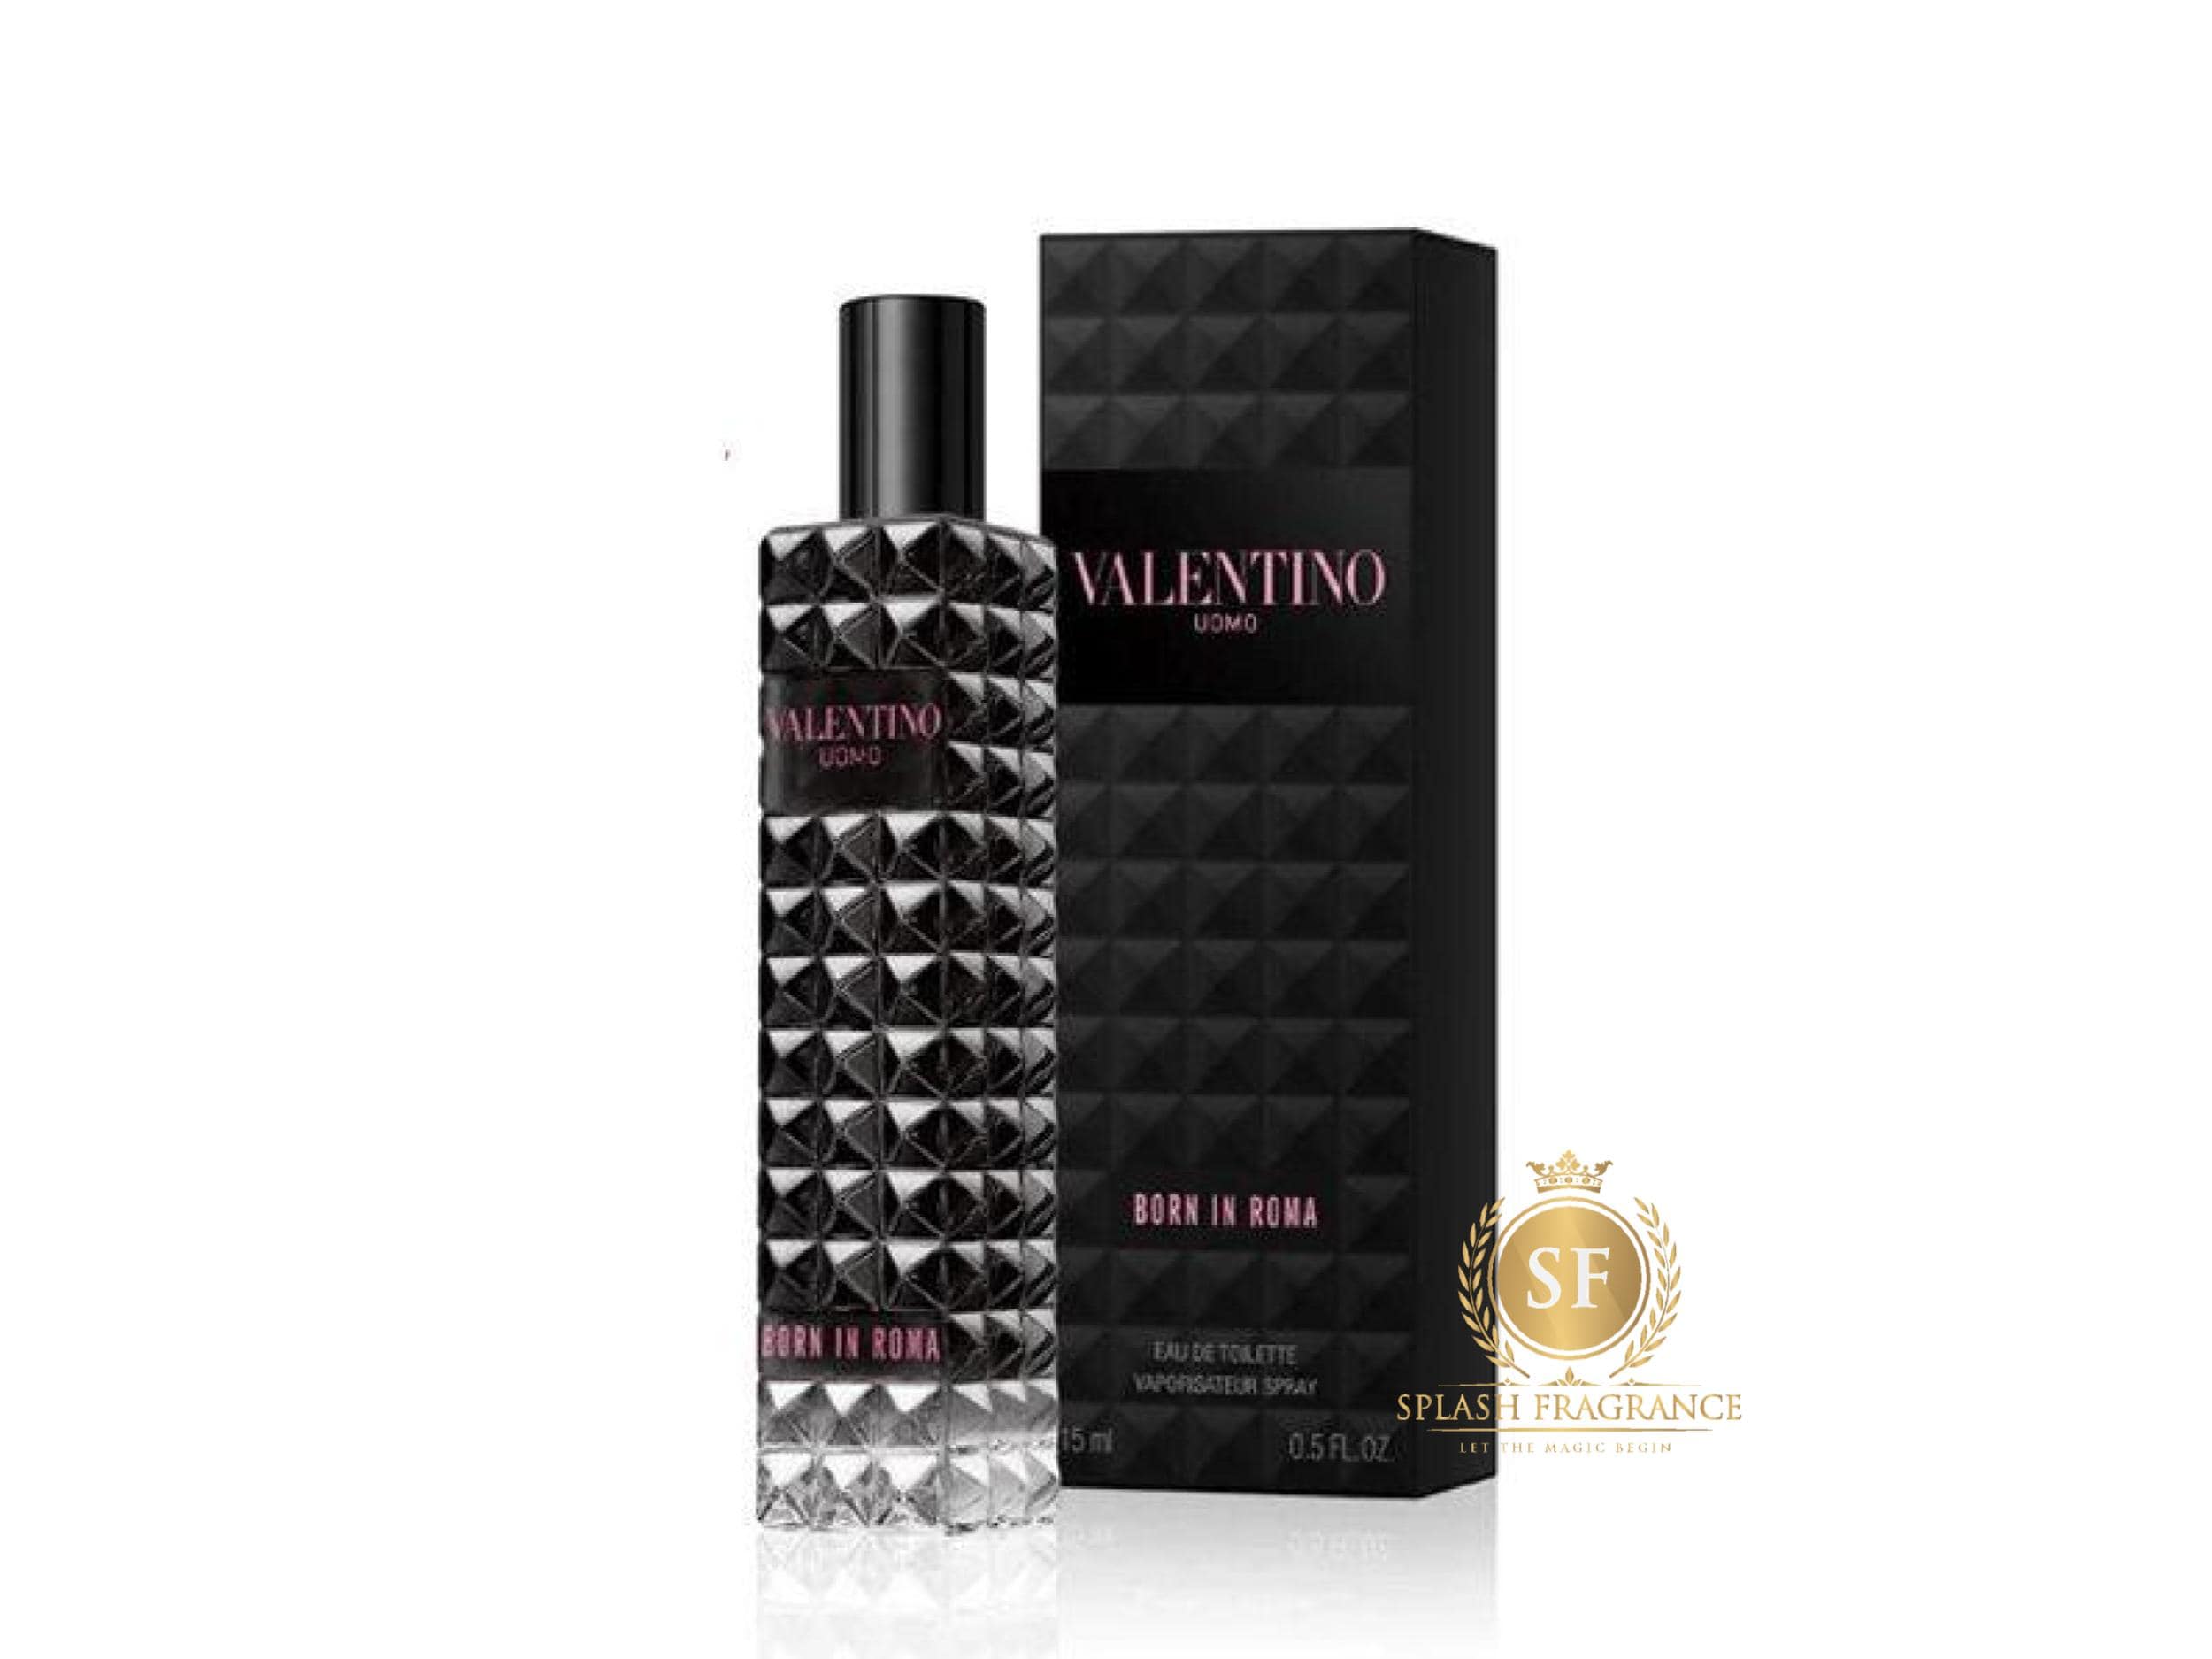 Uomo Born in Roma By Valentino 15ml Perfume Travel Spray